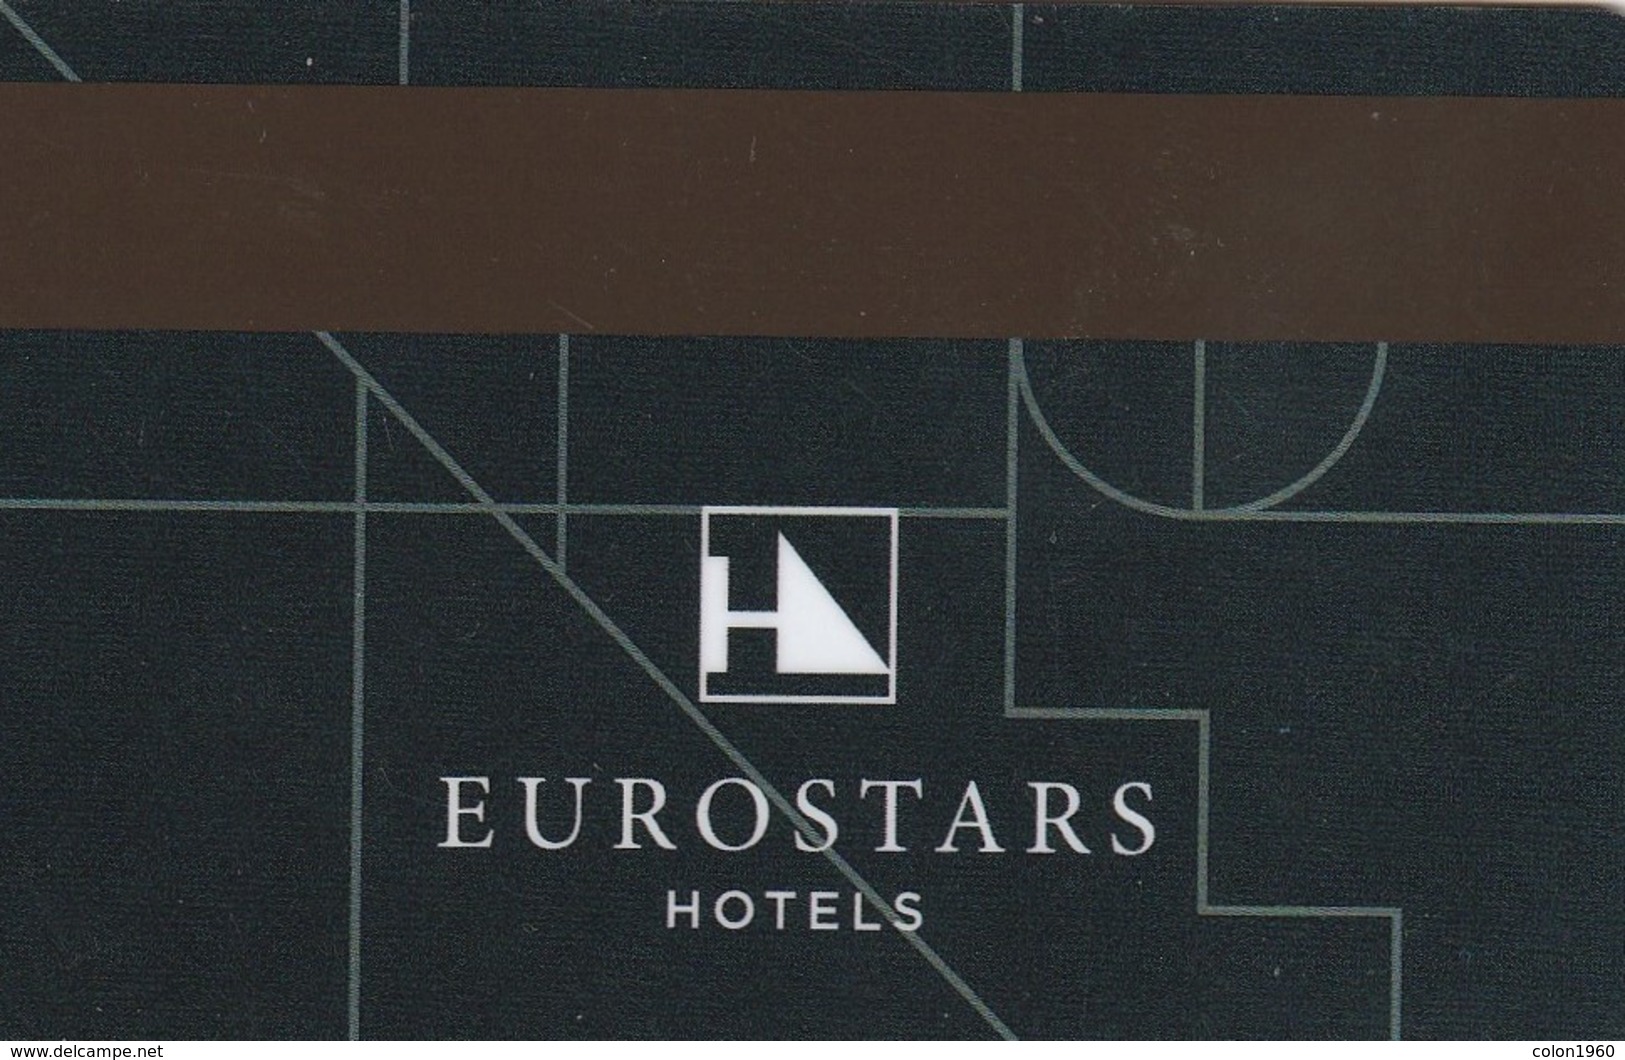 SPAIN. HOTEL KEY CARD. EUROSTARS HOTELS. ESP-12828. (023). - Cartas De Hotels